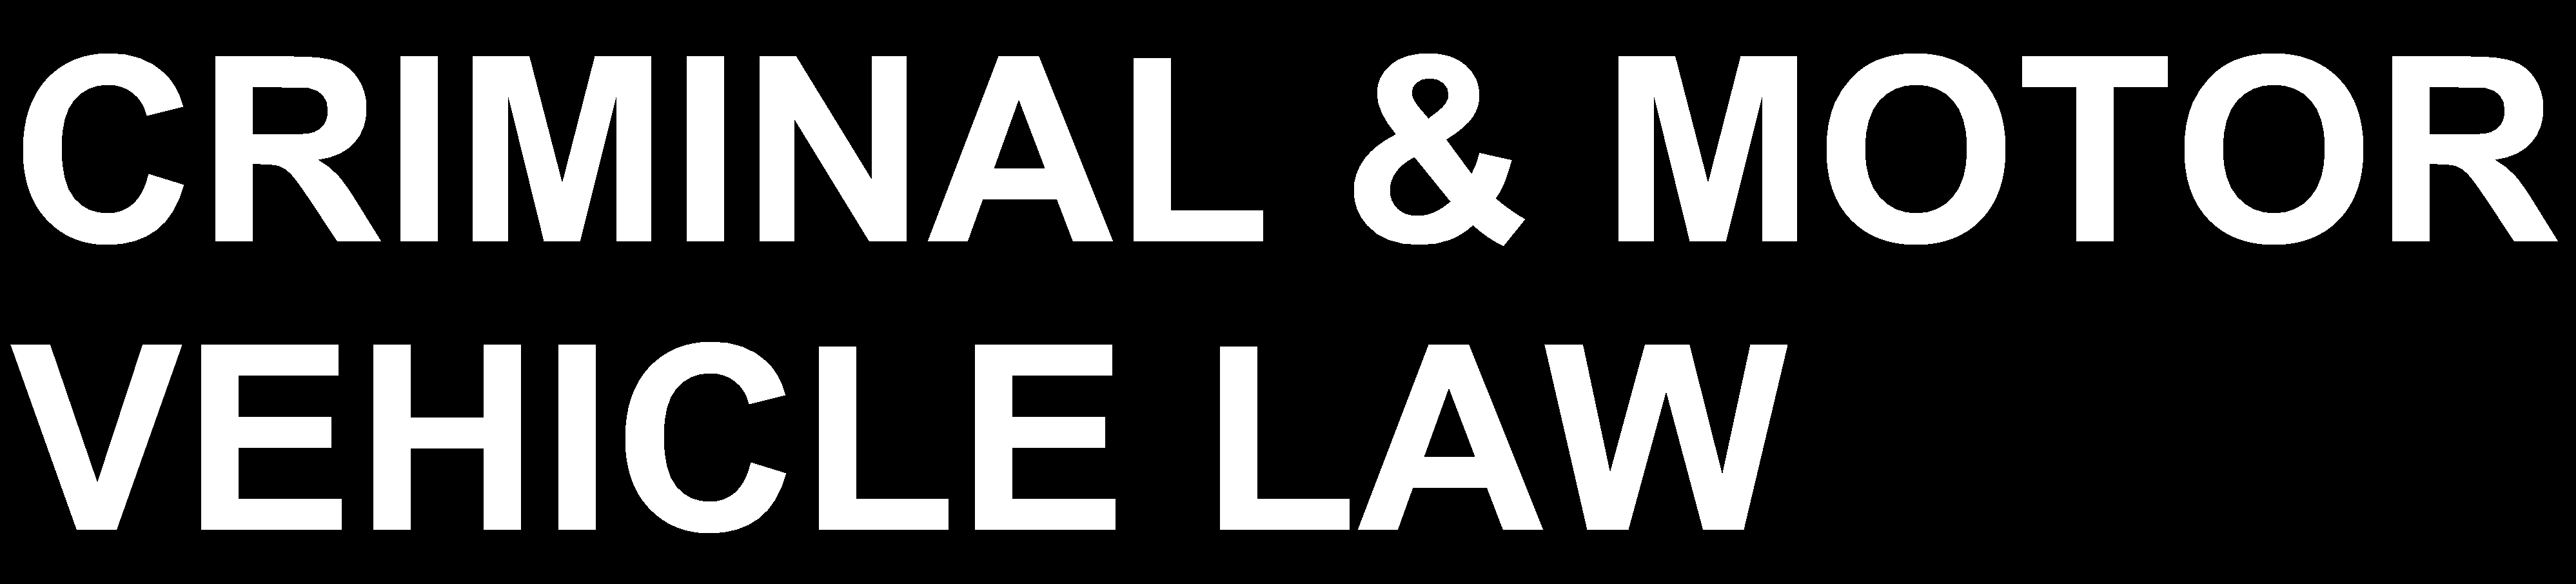 vehicle law